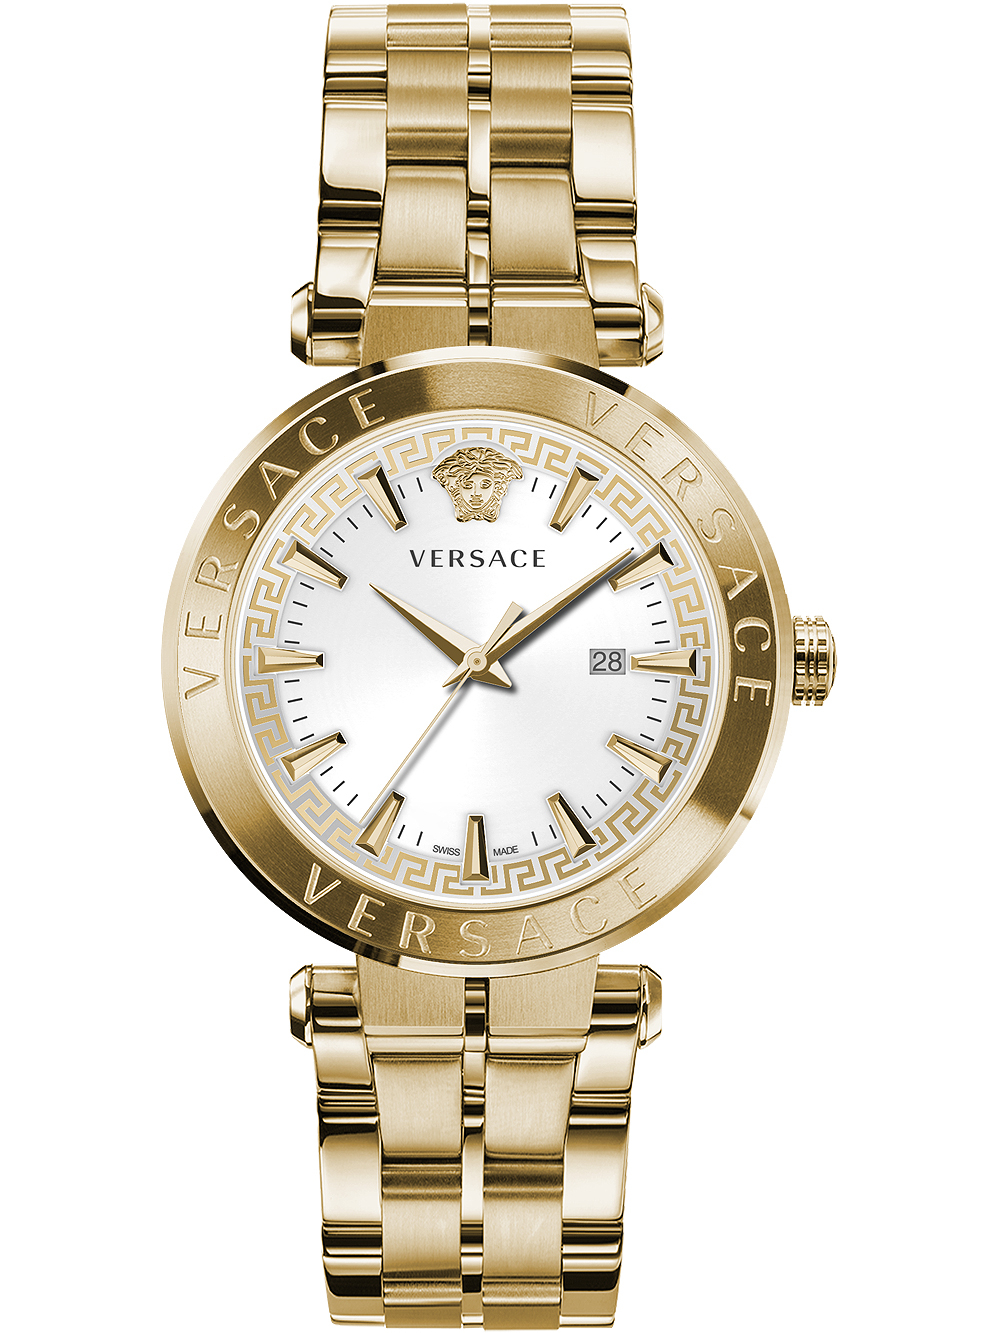 Zegarek męski Versace VE2F00521 Aion złoty